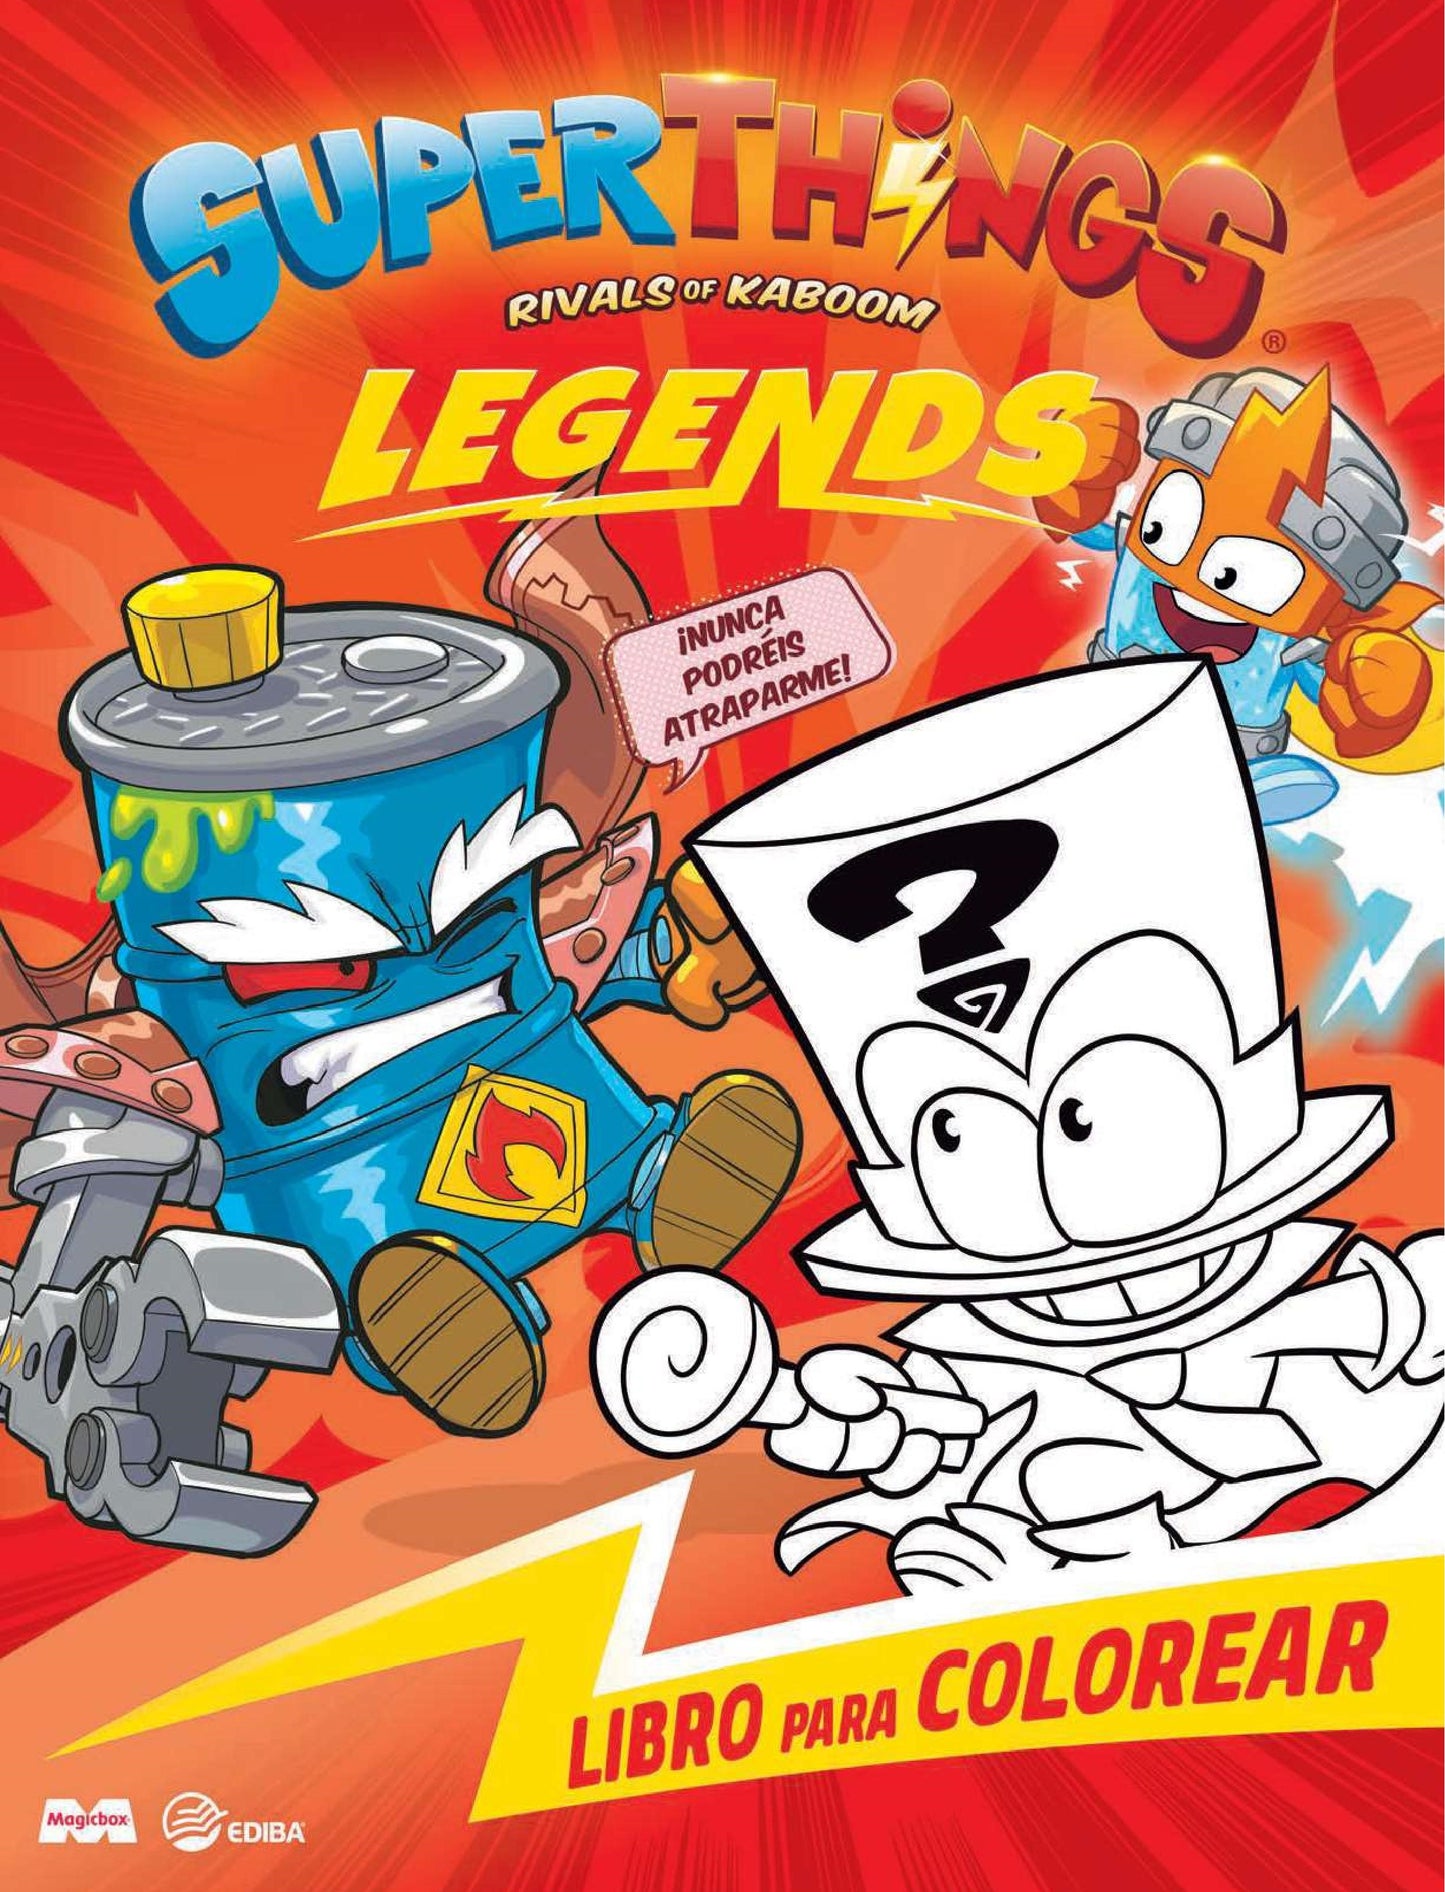 Libro para Colorear Superthings Nº13 Serie Legends